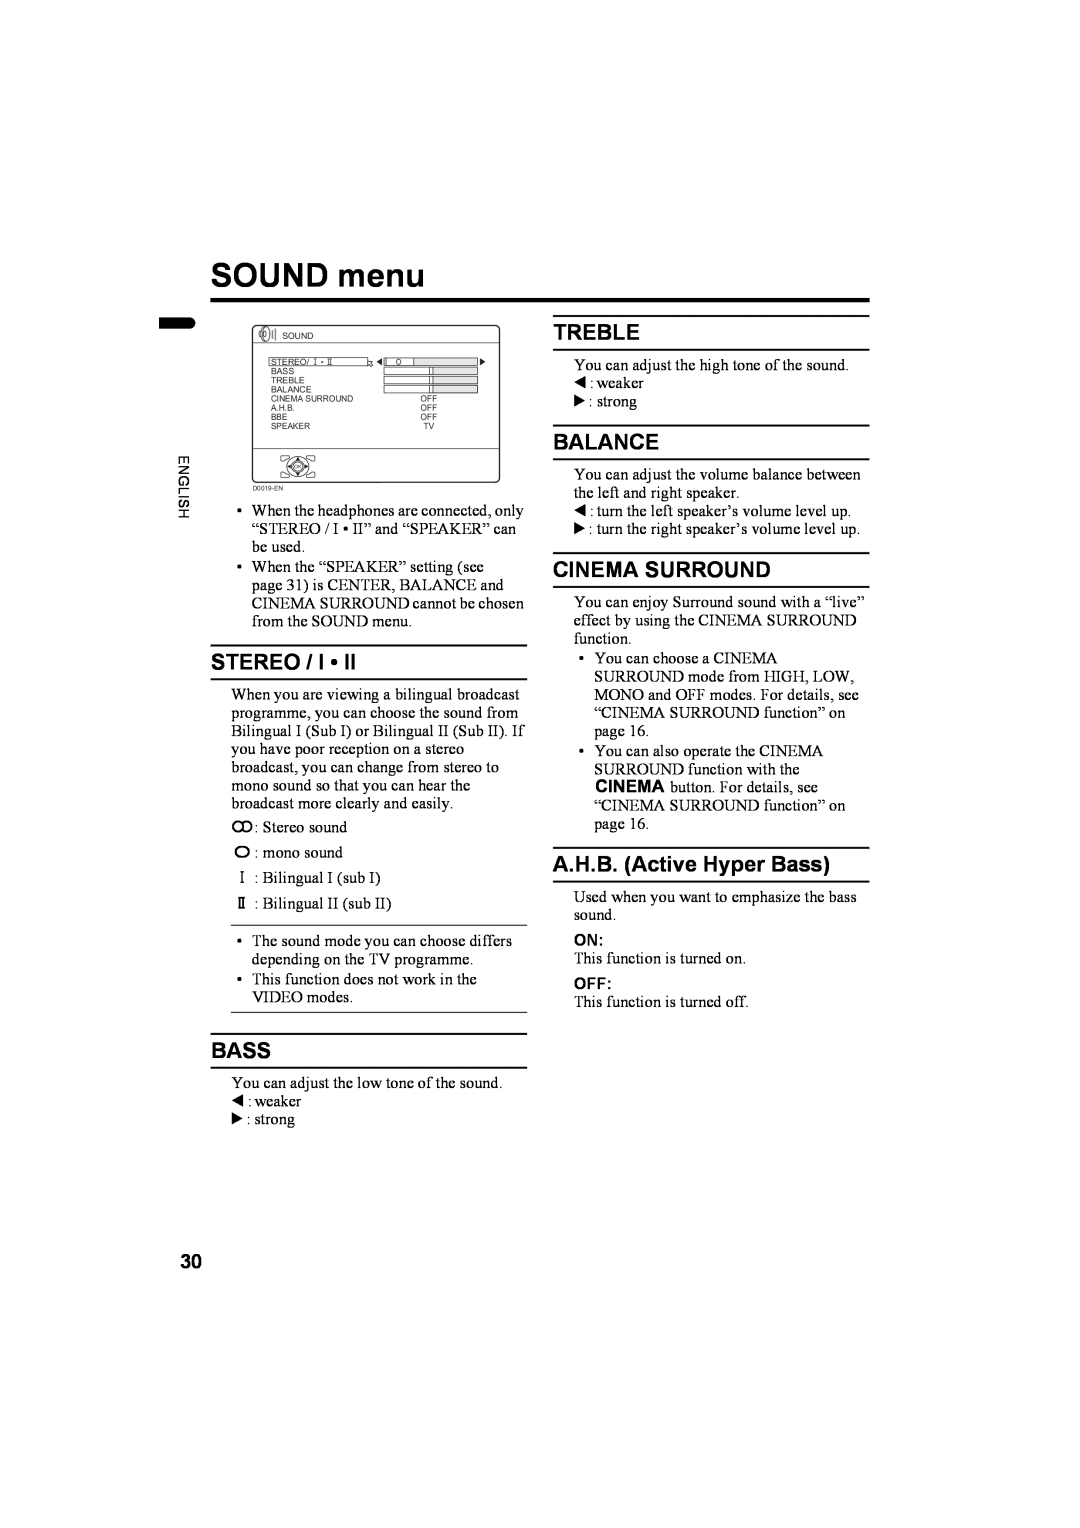 JVC 1004MKH-CR-VP, LCT1774-001A manual SOUND menu, Stereo / I, Treble, Balance, Cinema Surround, A.H.B. Active Hyper Bass 